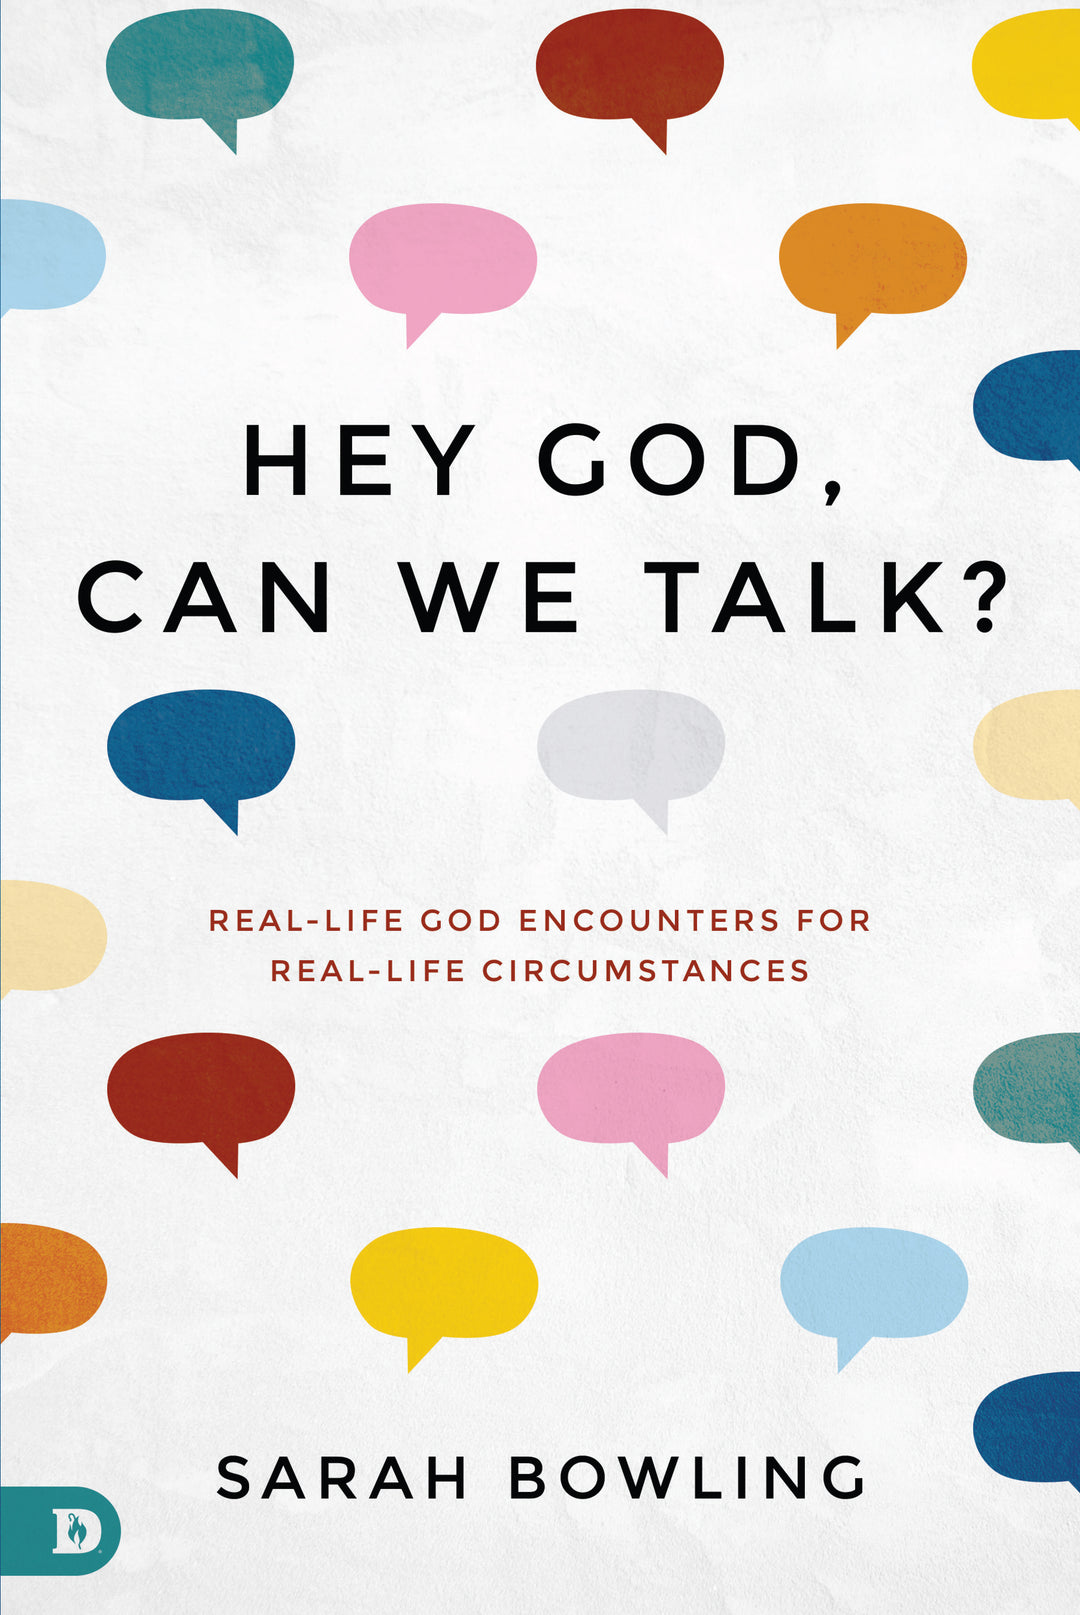 Hey God, Can We Talk?